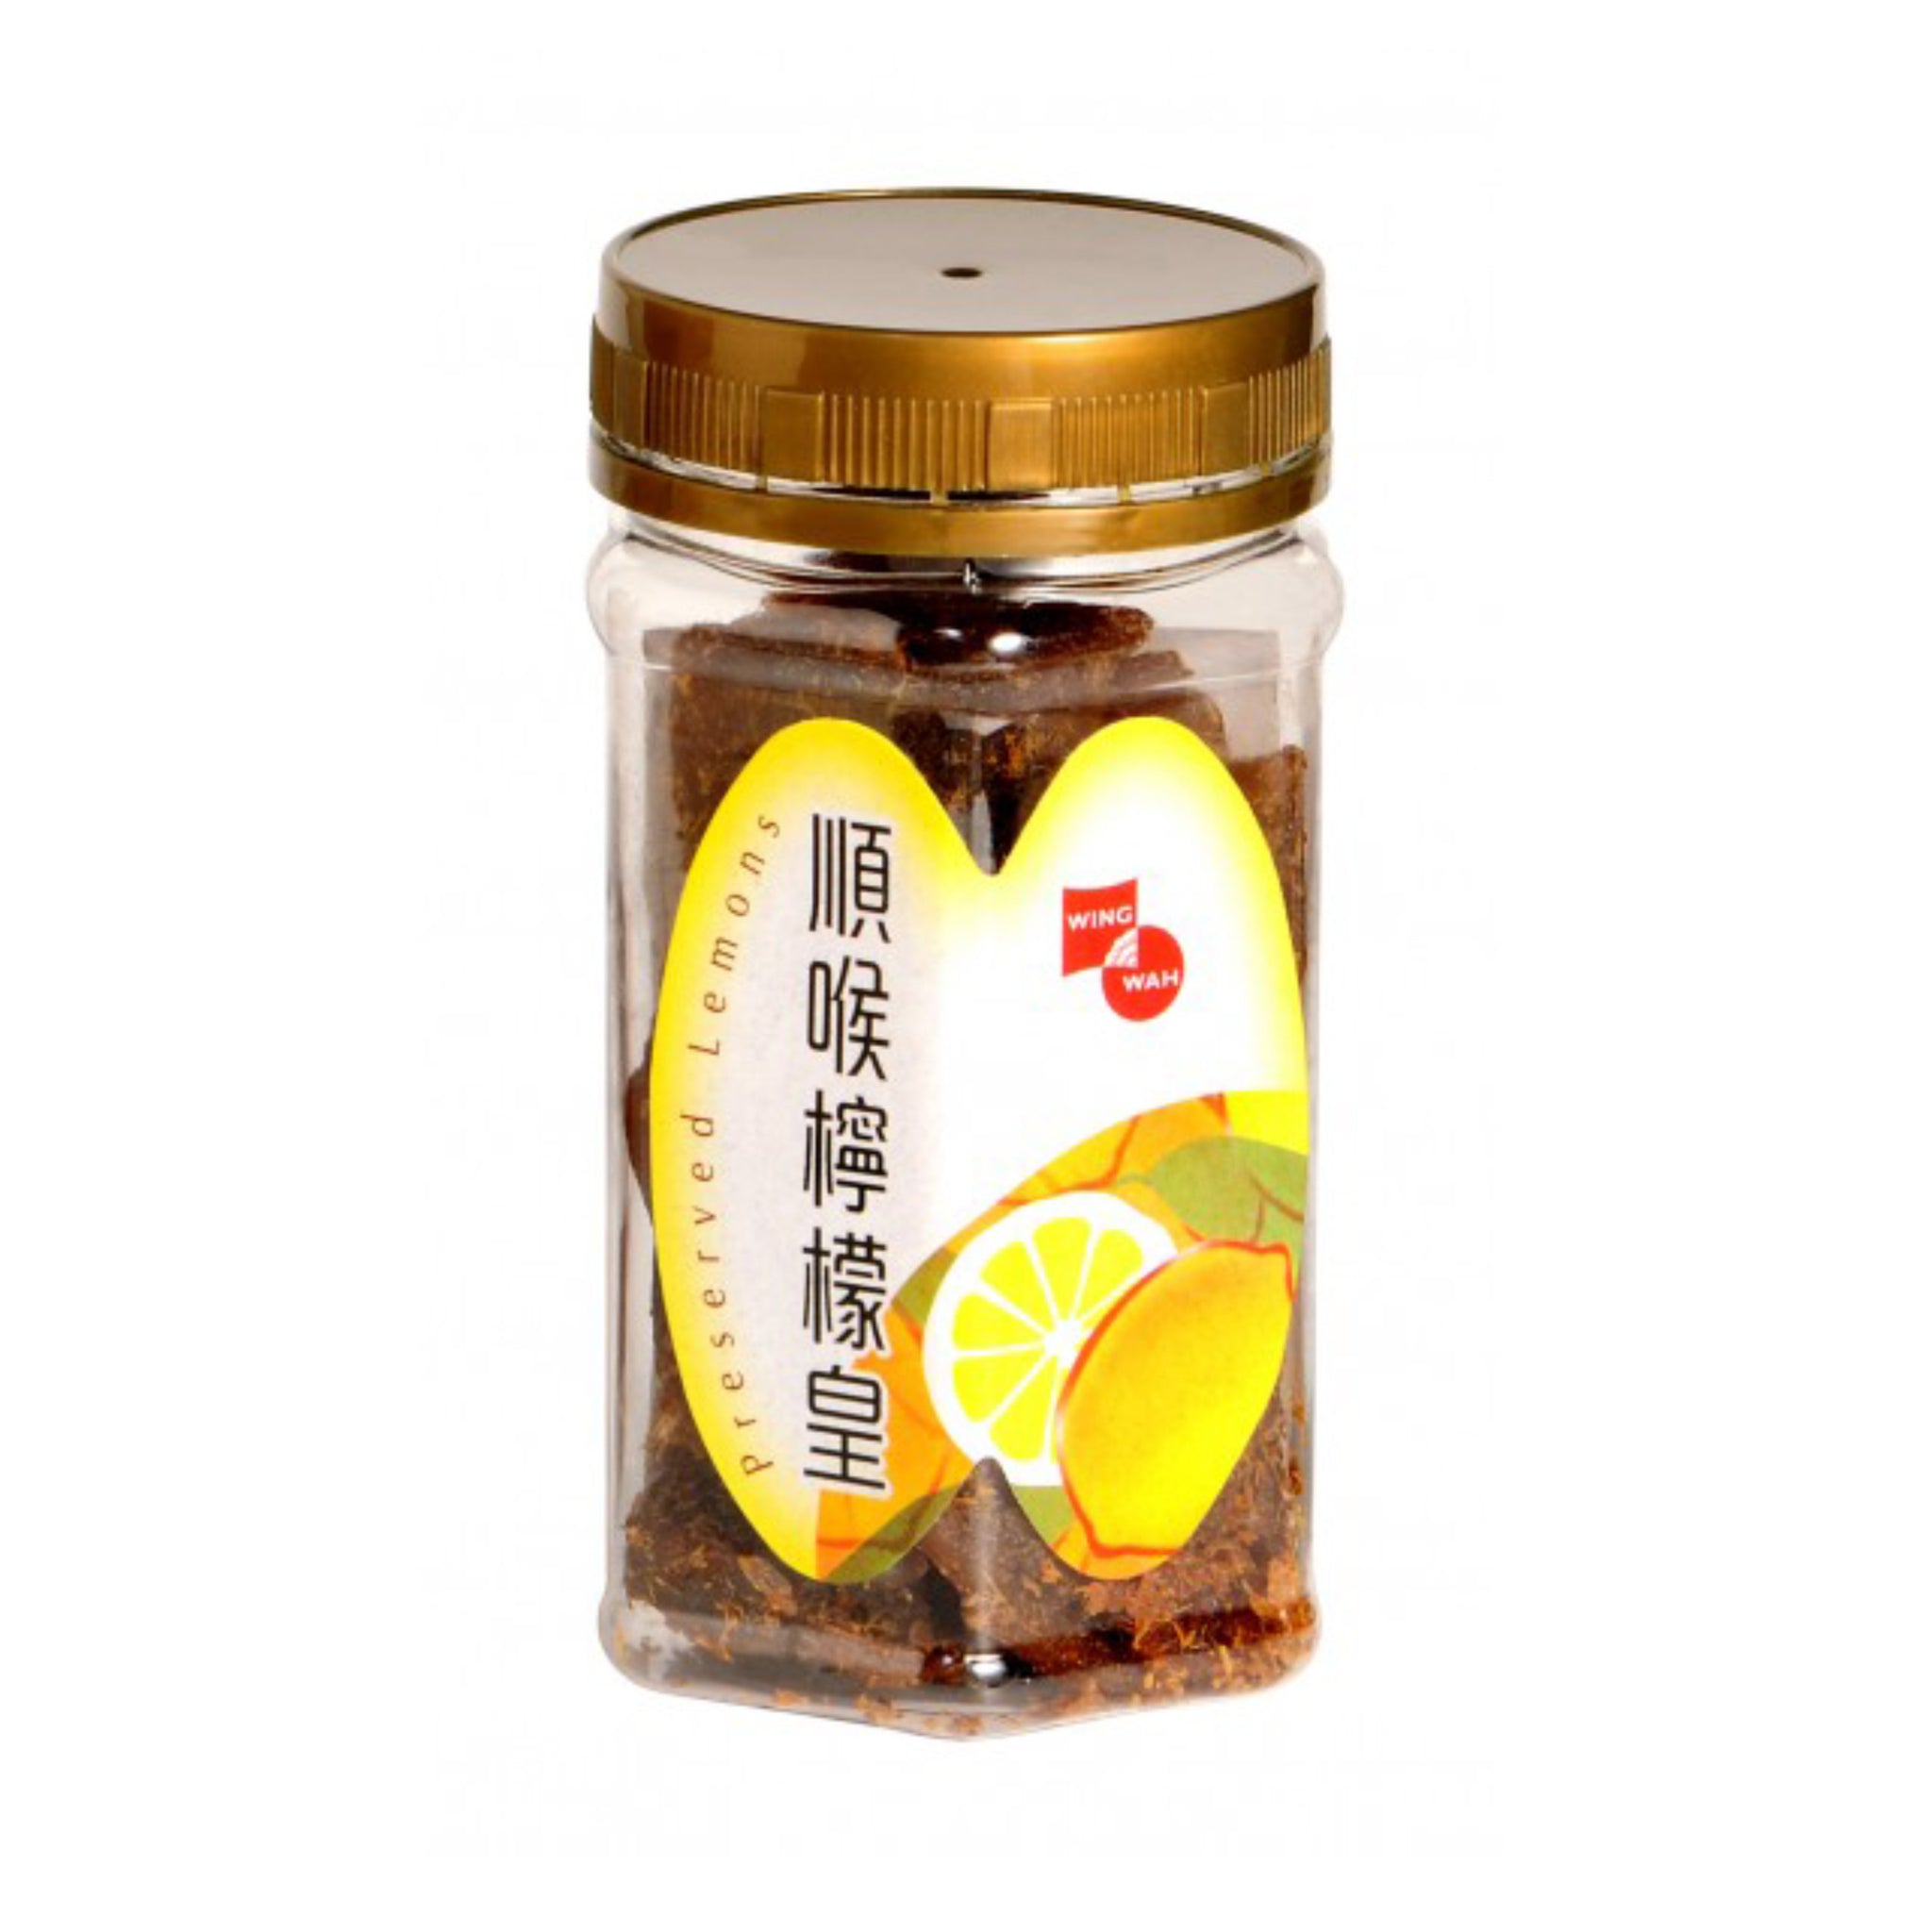 WING WAH Preserved Lemon King 100G 榮華 順喉檸檬皇(高樽) 100G